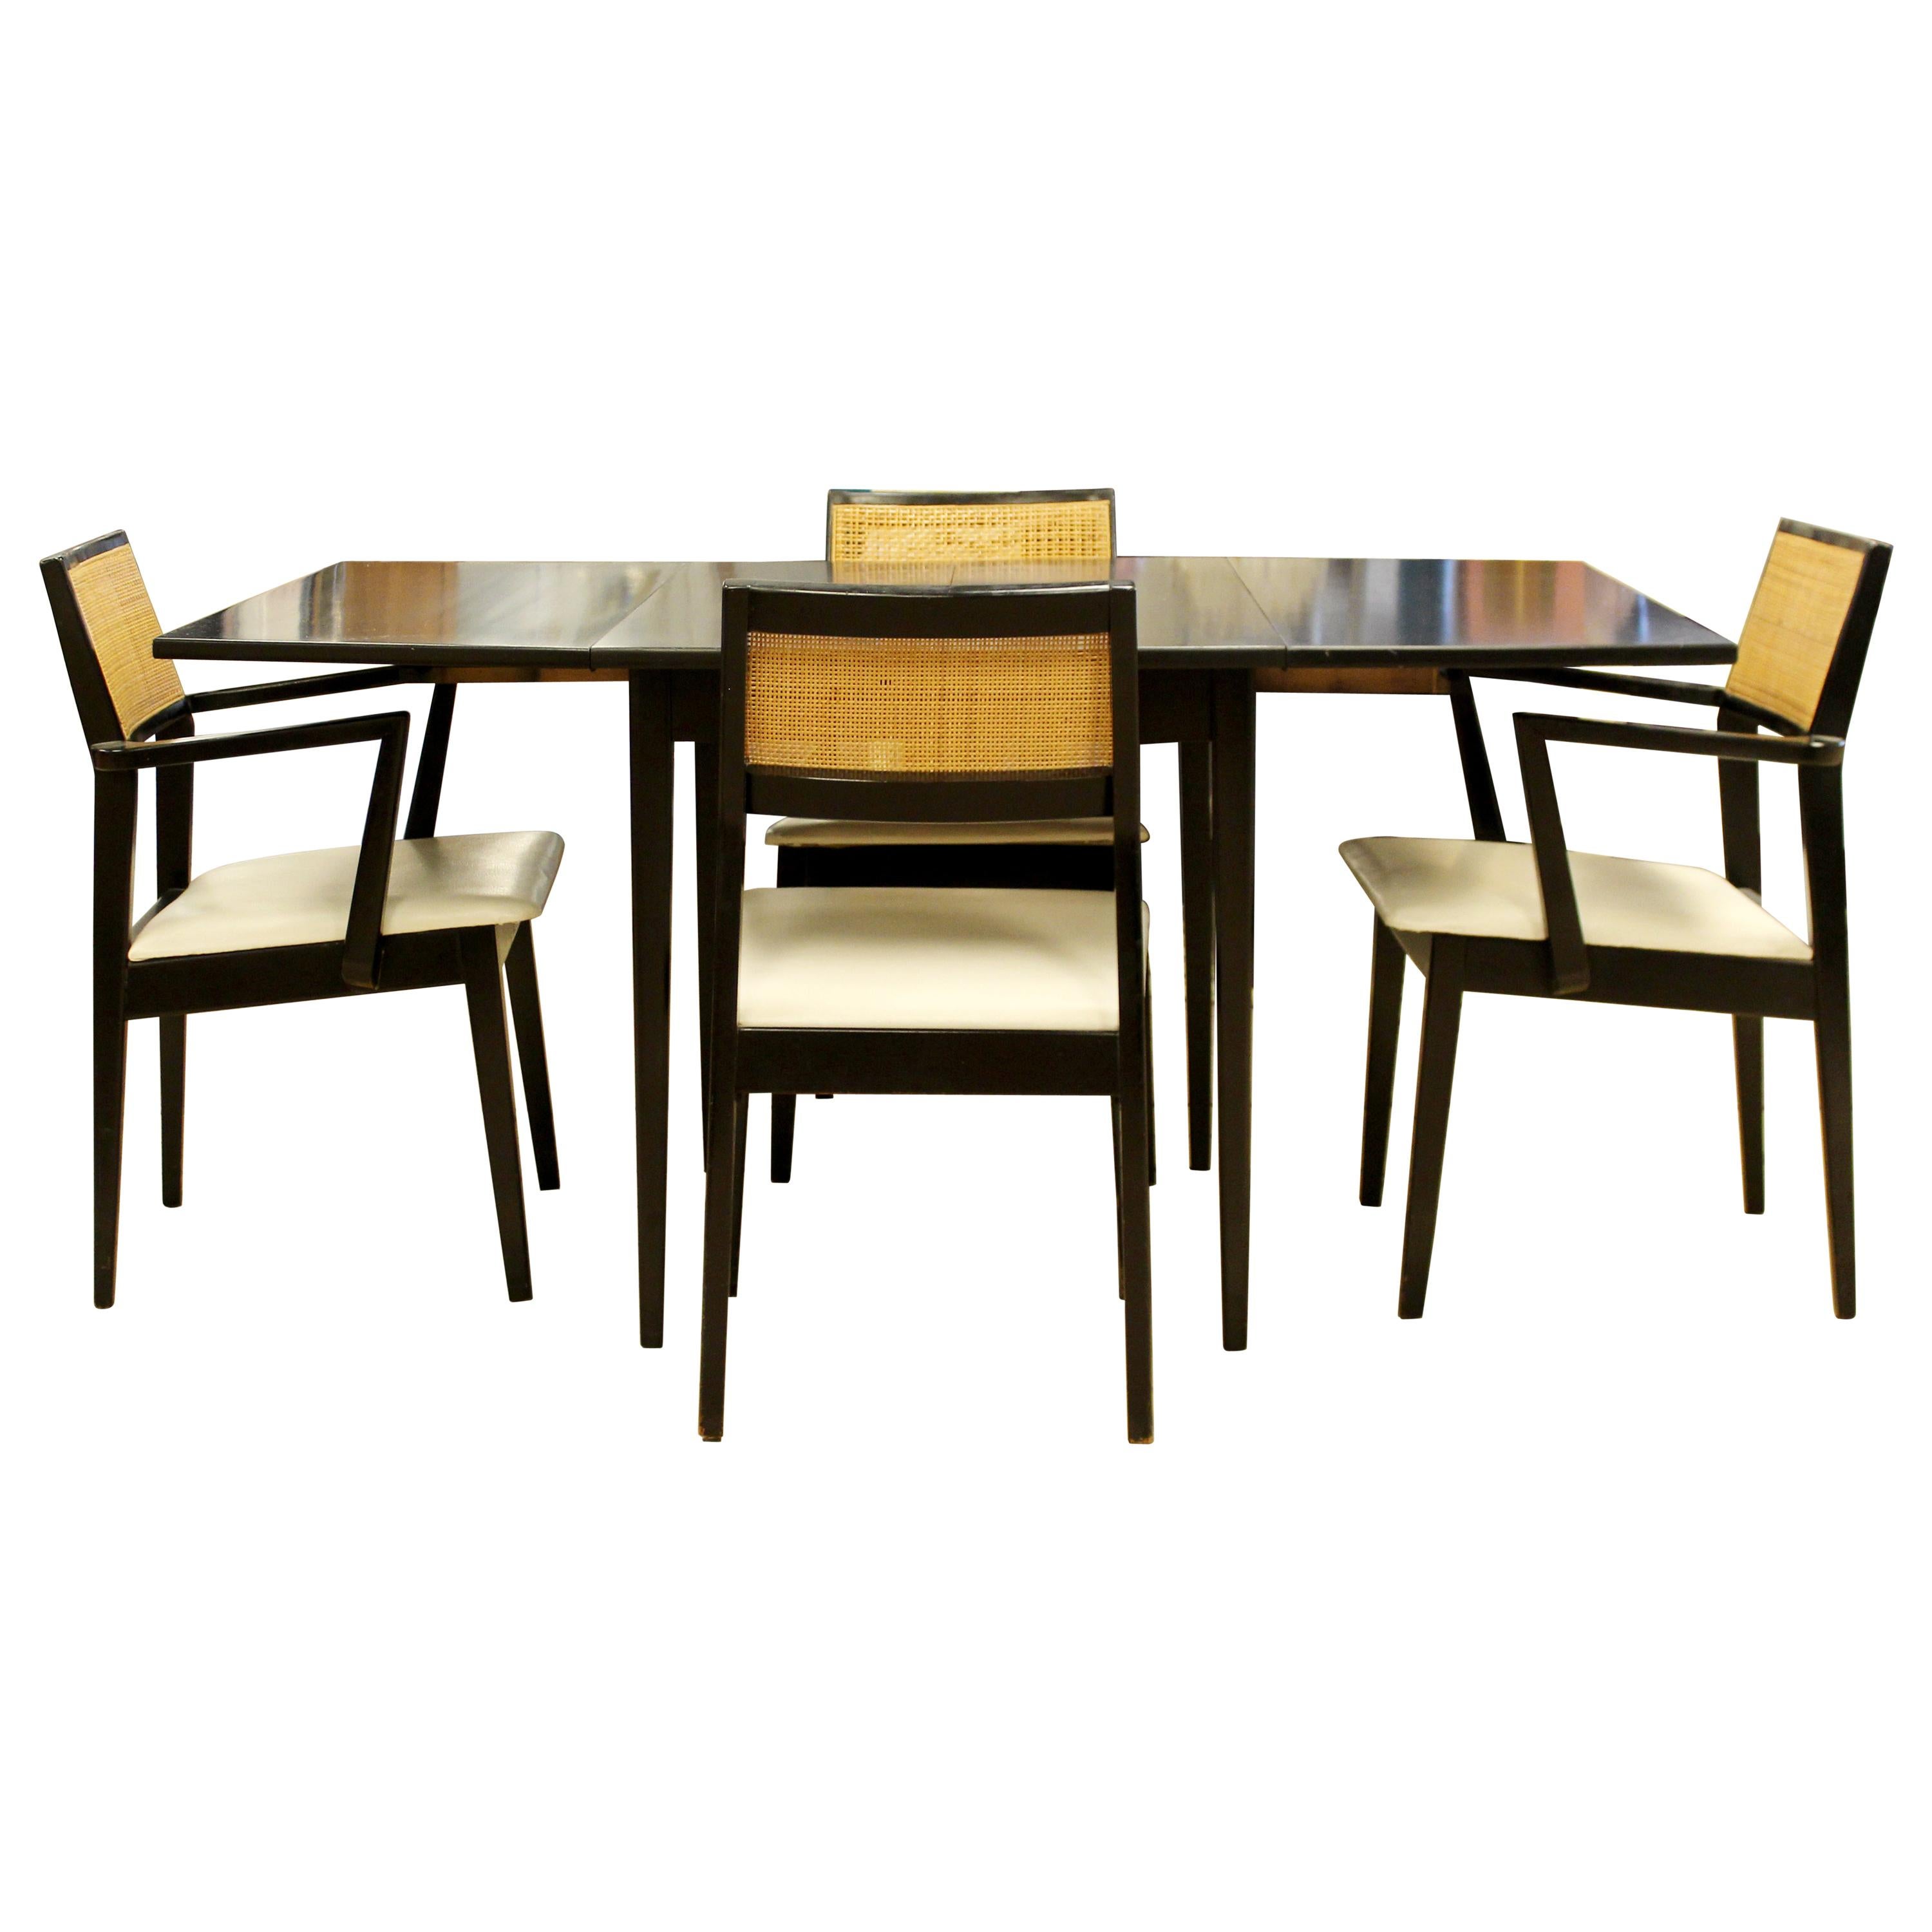 Hibriten Table - 3 For Sale on 1stDibs  hibriten dining room set, hibriten  furniture value, bernhardt hibriten dining room set